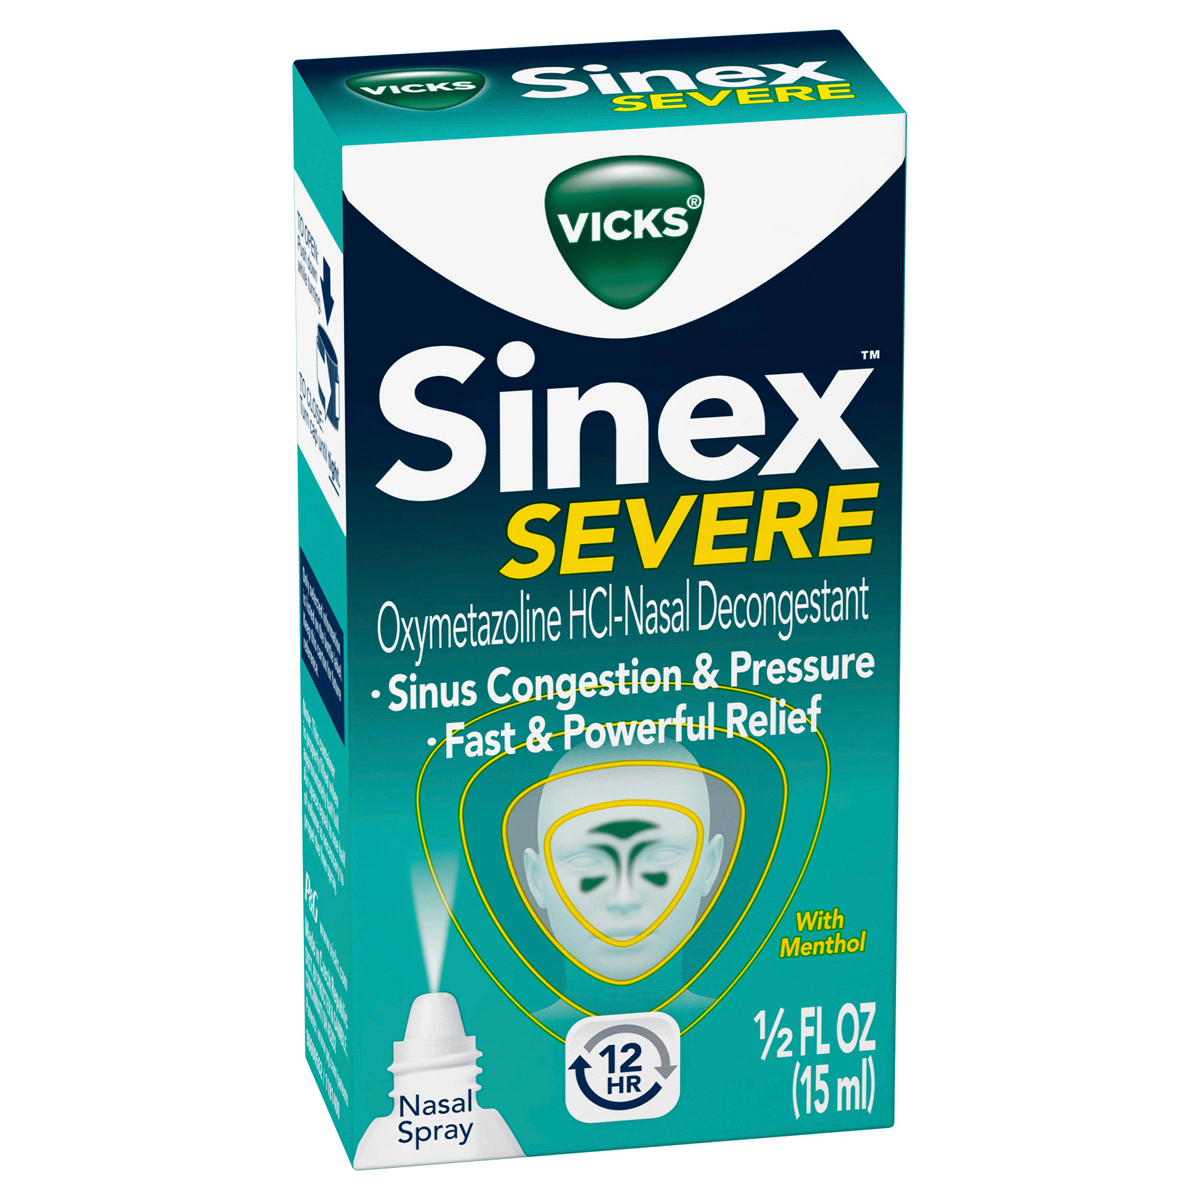 Vicks Sinex Severe Original Nasal Spray Decongestant For Fast Relief ...